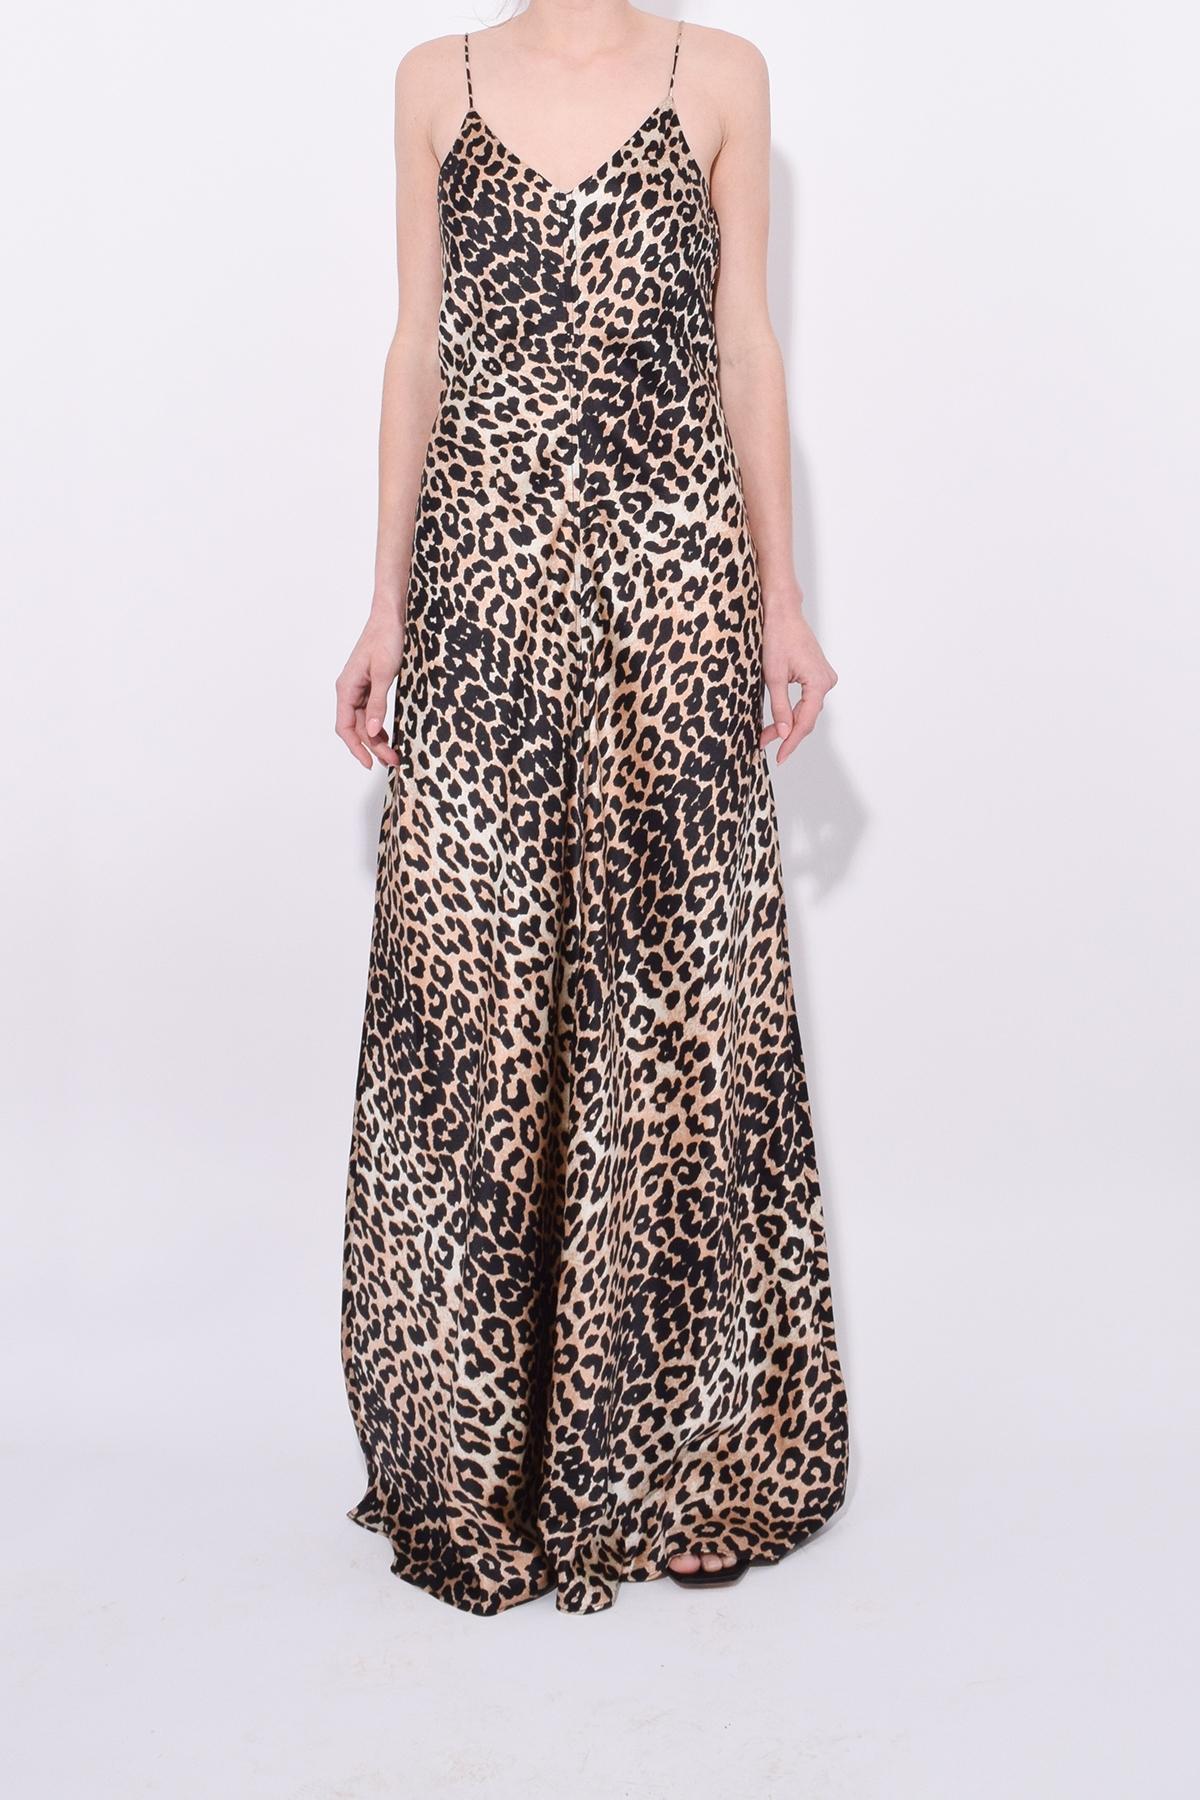 Ganni Blakely Silk Slip Dress In Leopard in Black - Lyst